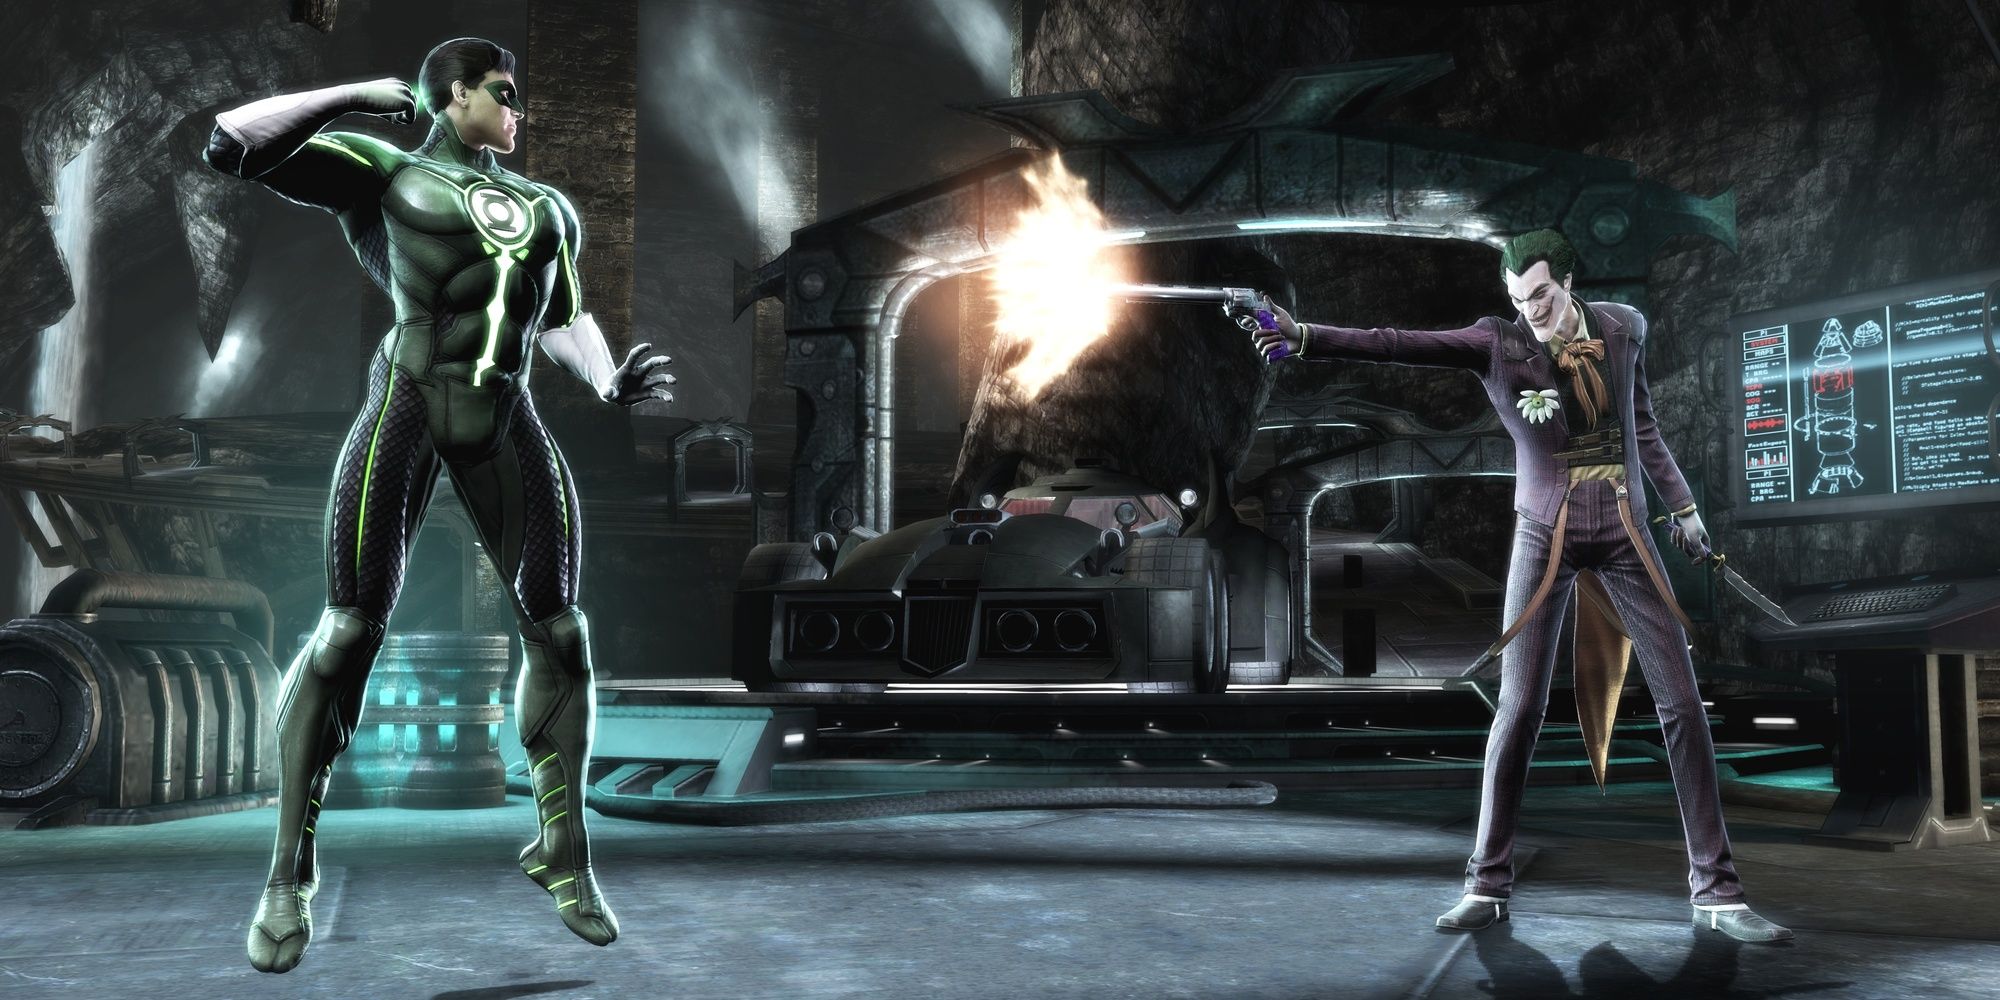 The Joker versus Green Lantern in Injustice: Gods Among Us